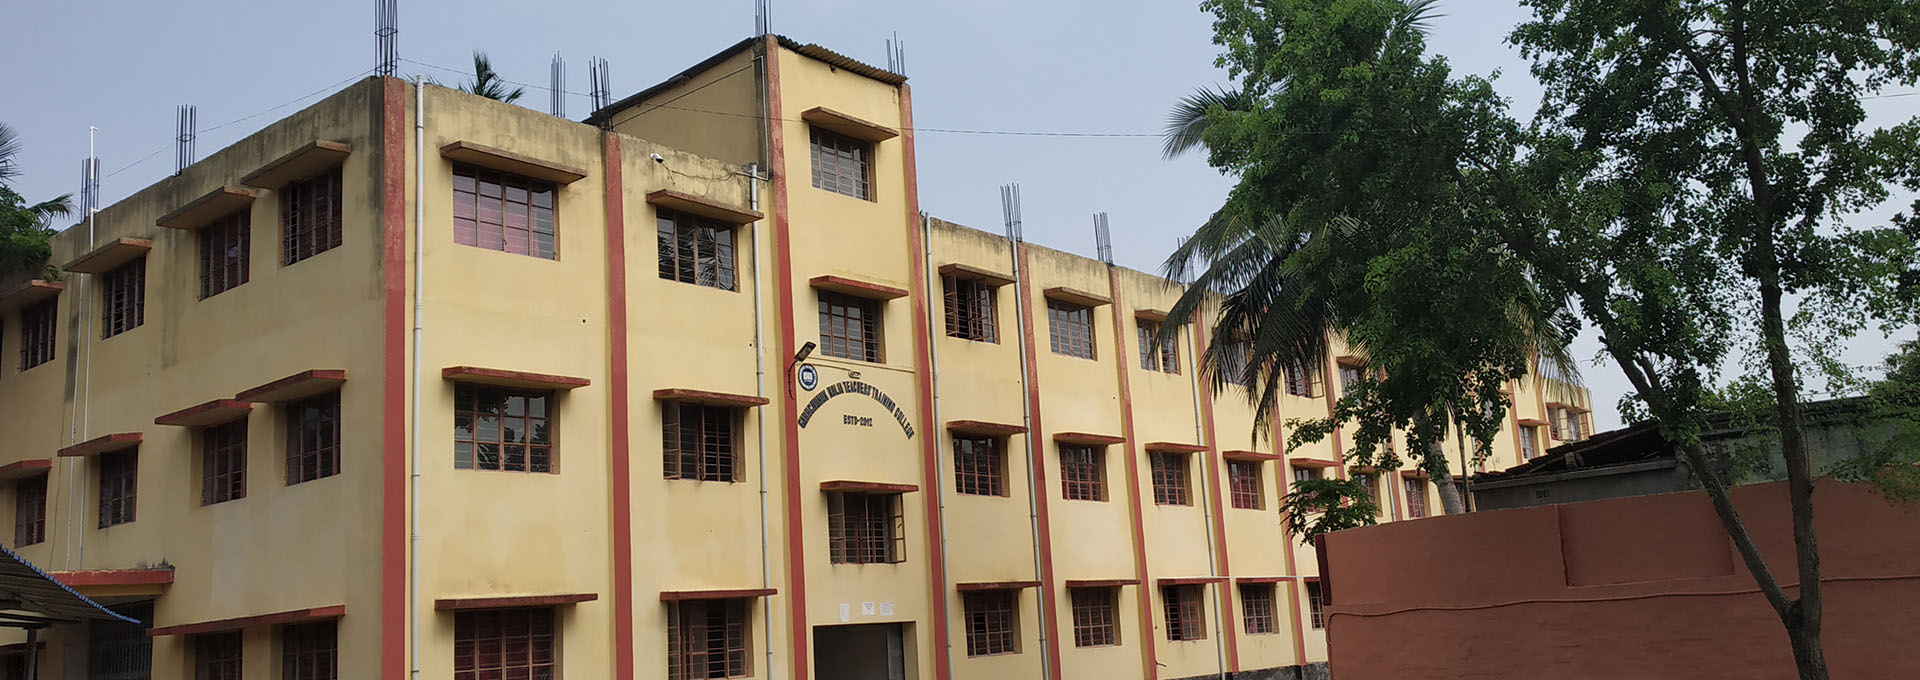 Garhchumuk Kolia Teachers' Training College, Howrah Image